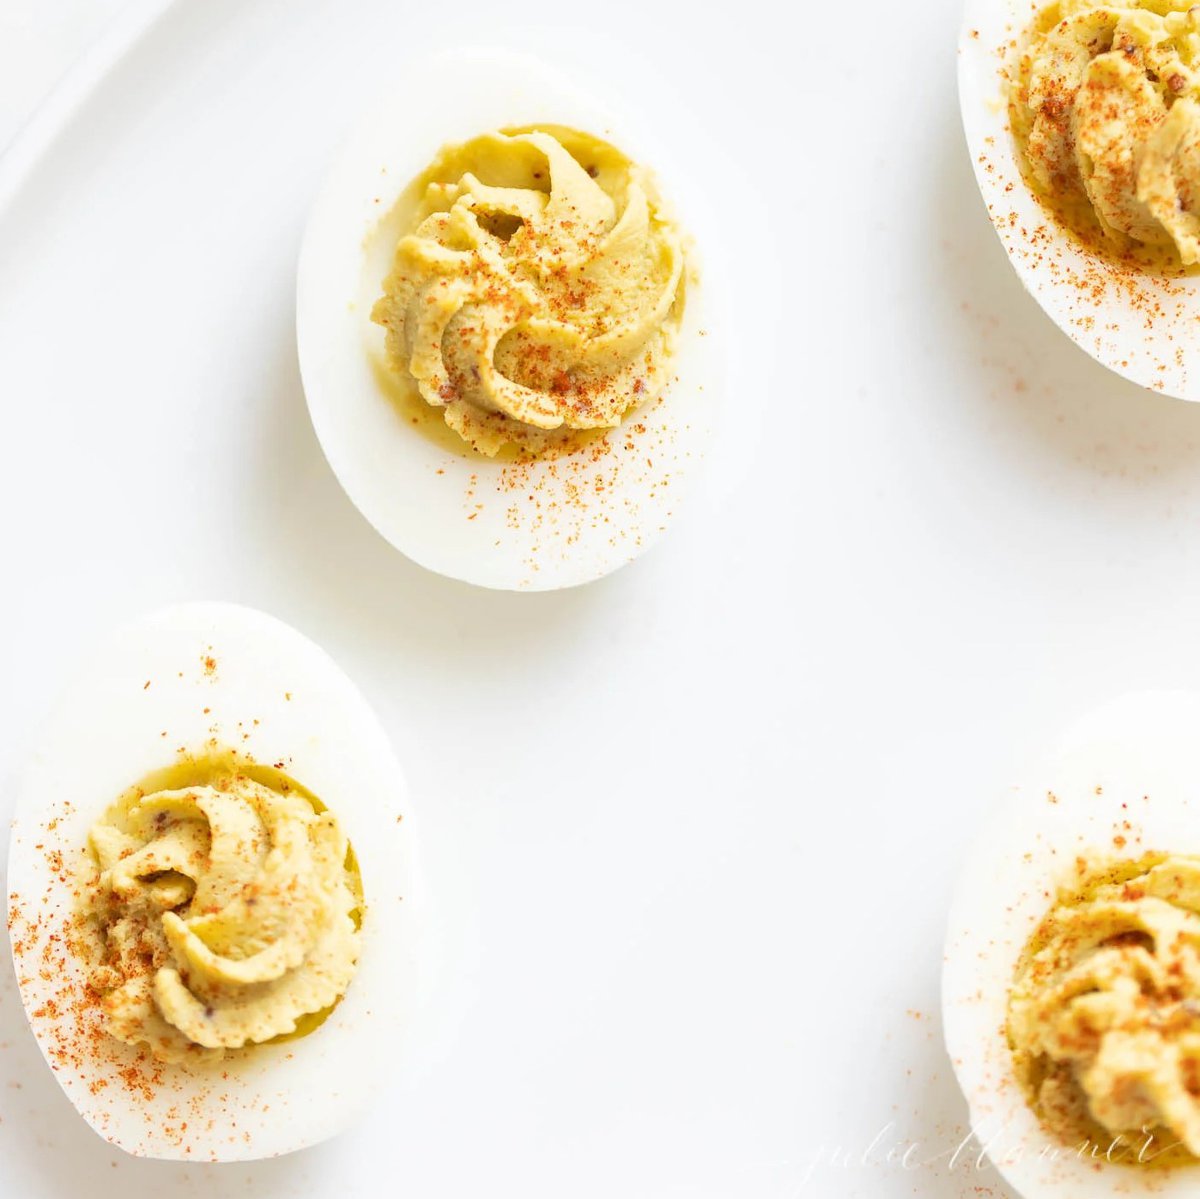 Avocado Deviled Eggs - My Incredible Recipes